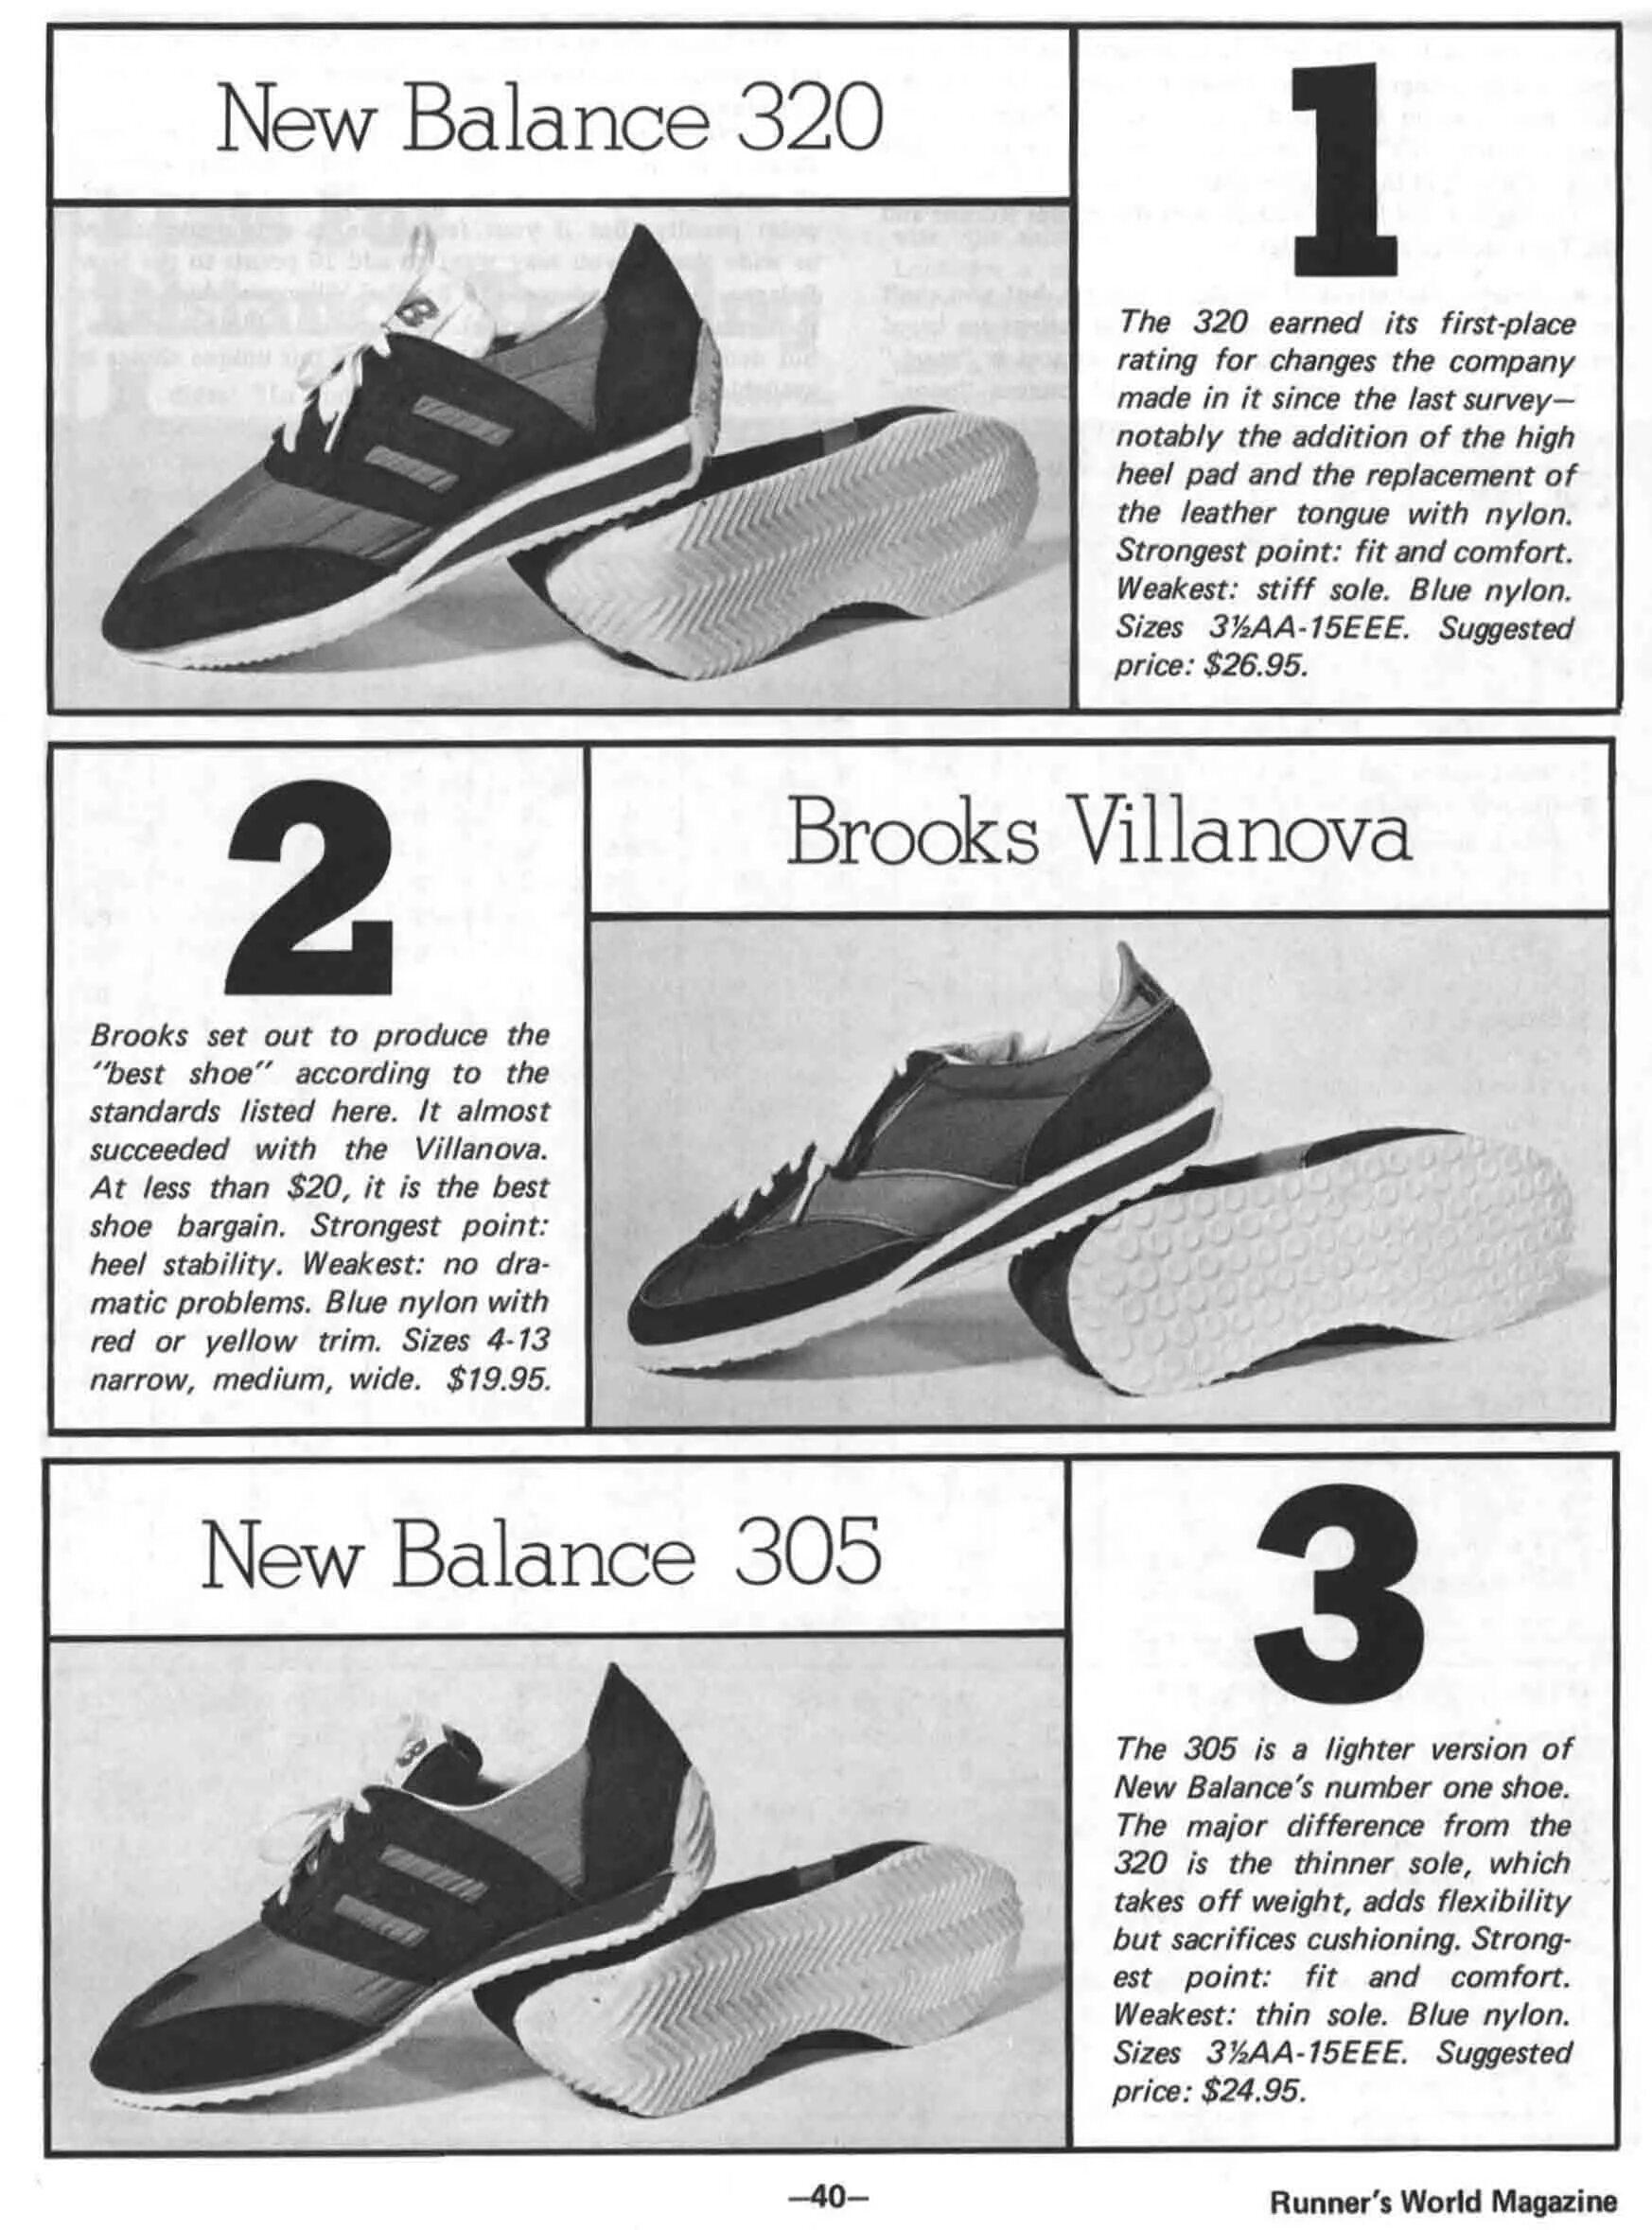 New balance история. New Balance 1906u. New Balance Boss Shoes 1906. New Balance Trackster первые кроссовки. New Balance первые модели.